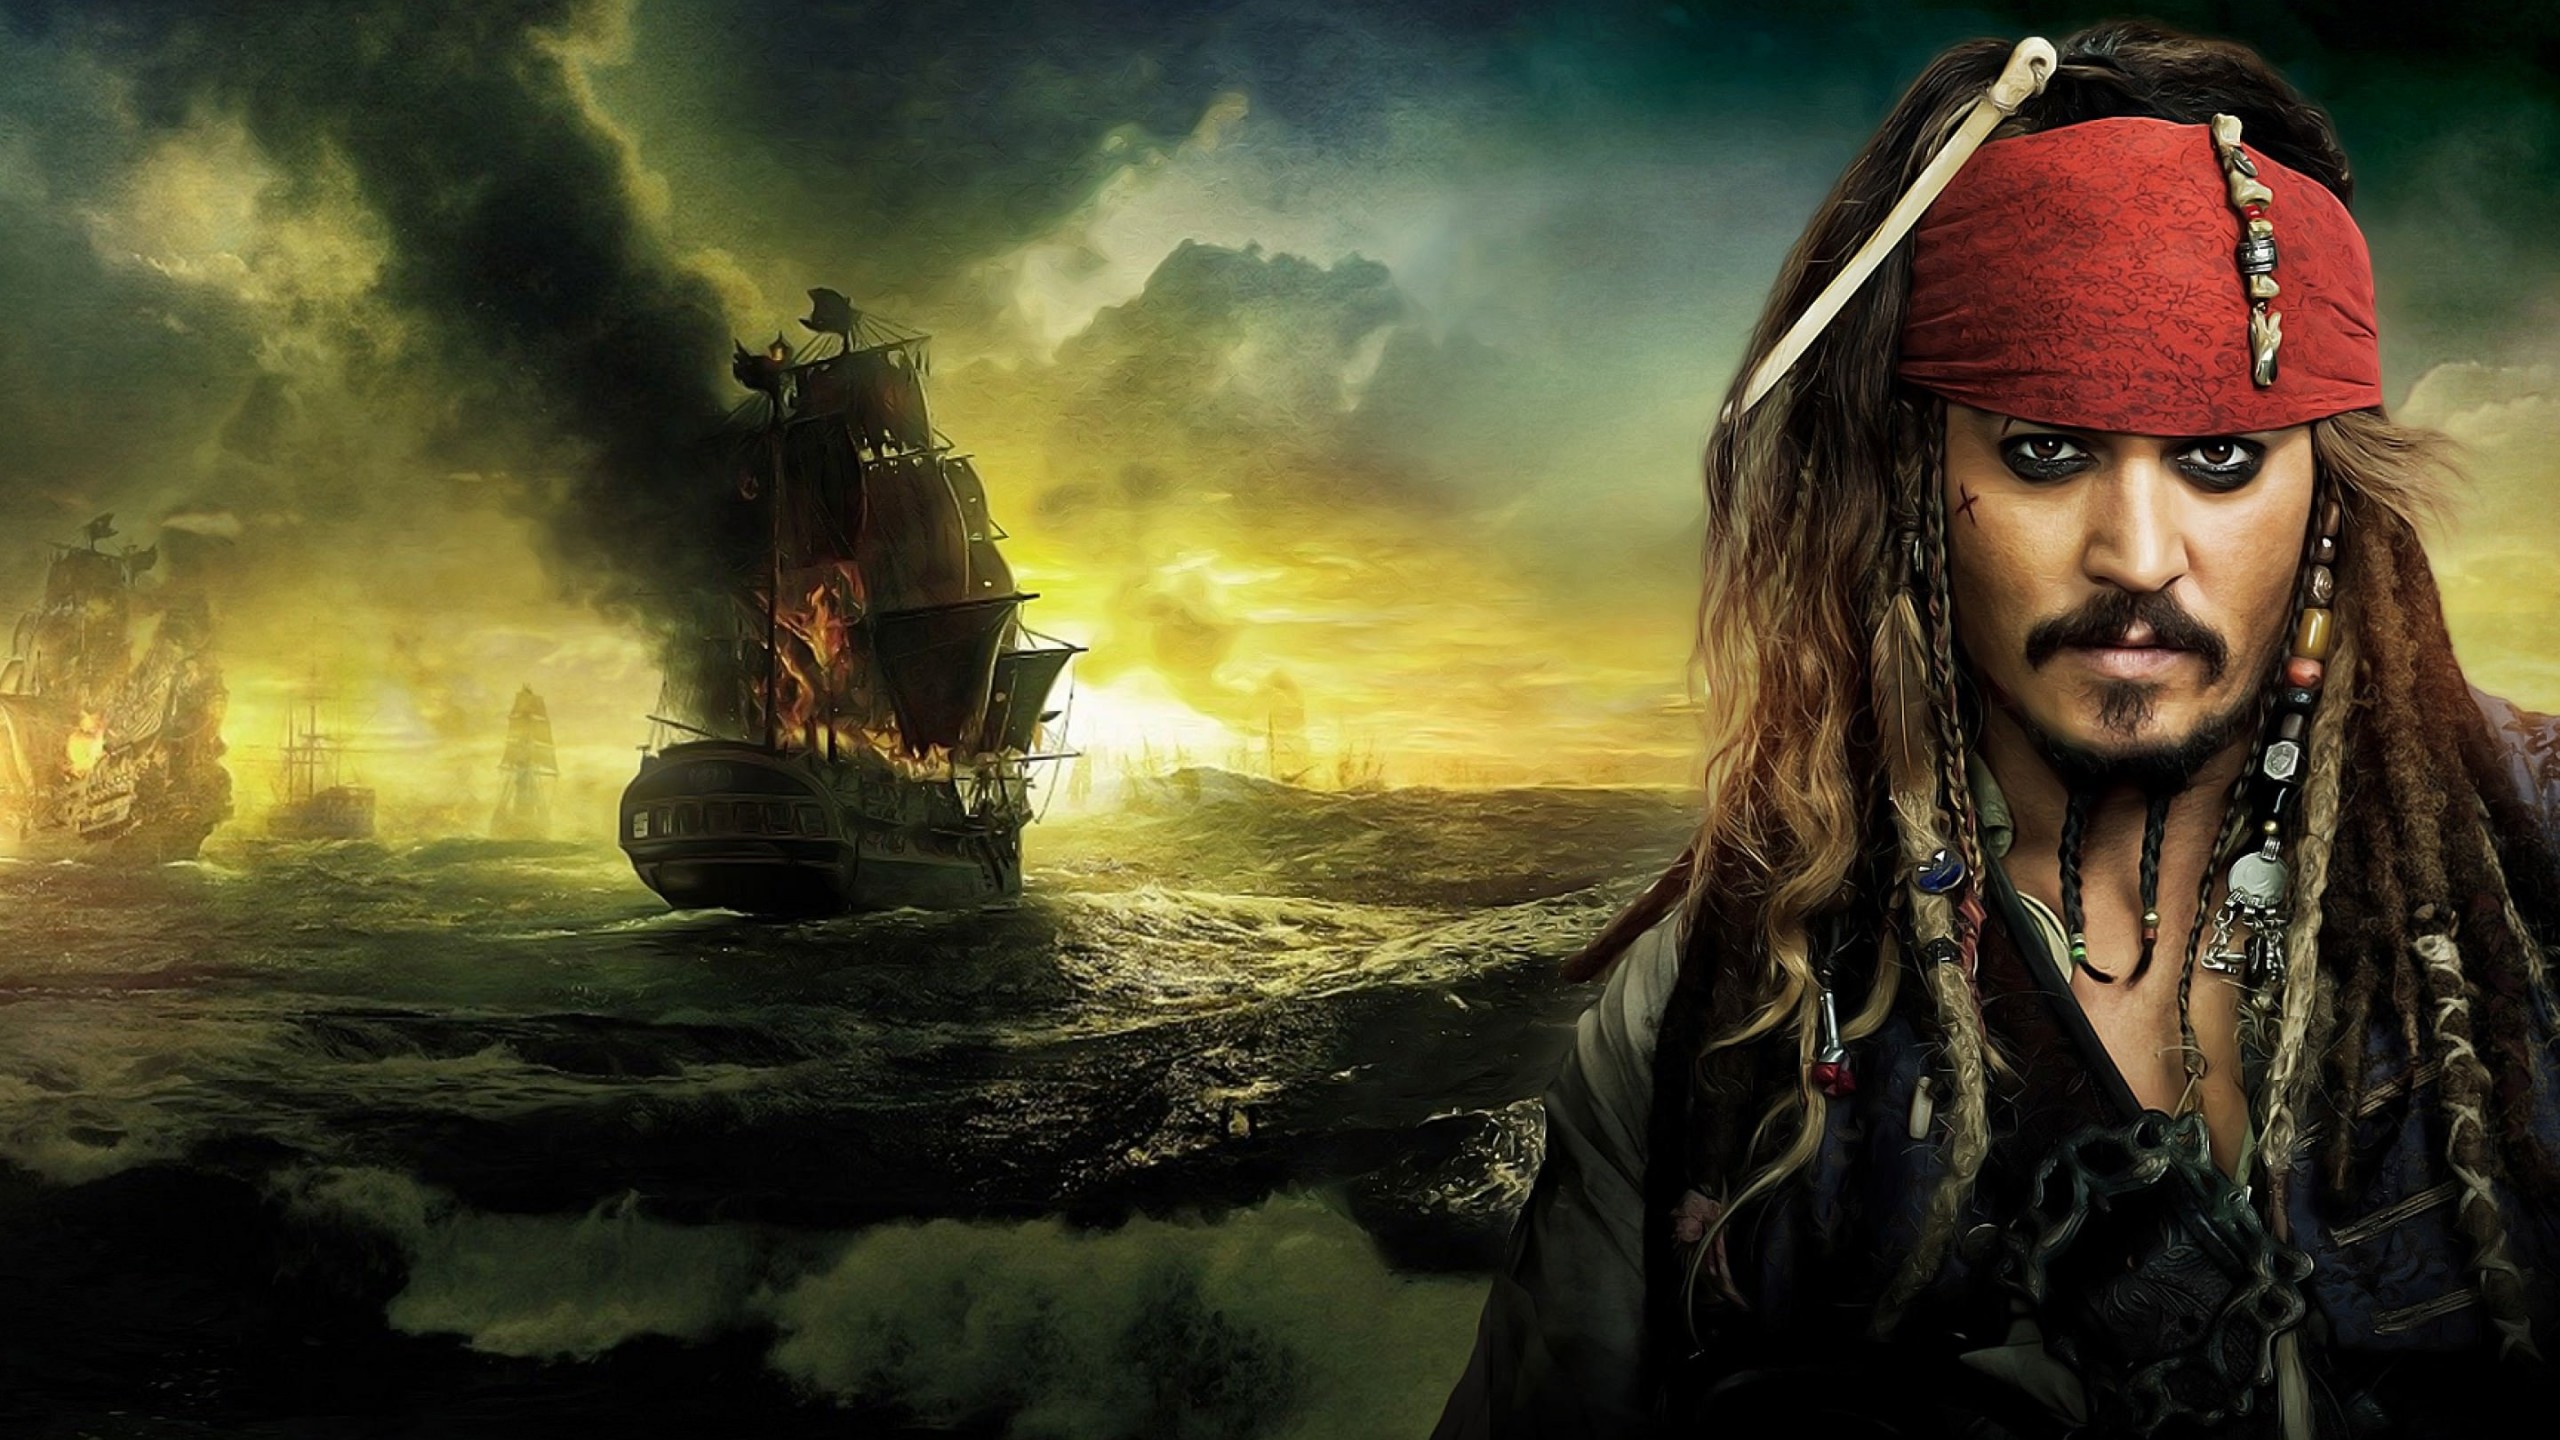 Jack Sparrow - Pirates Of The Caribbean Wallpaper for Desktop 2560x1440